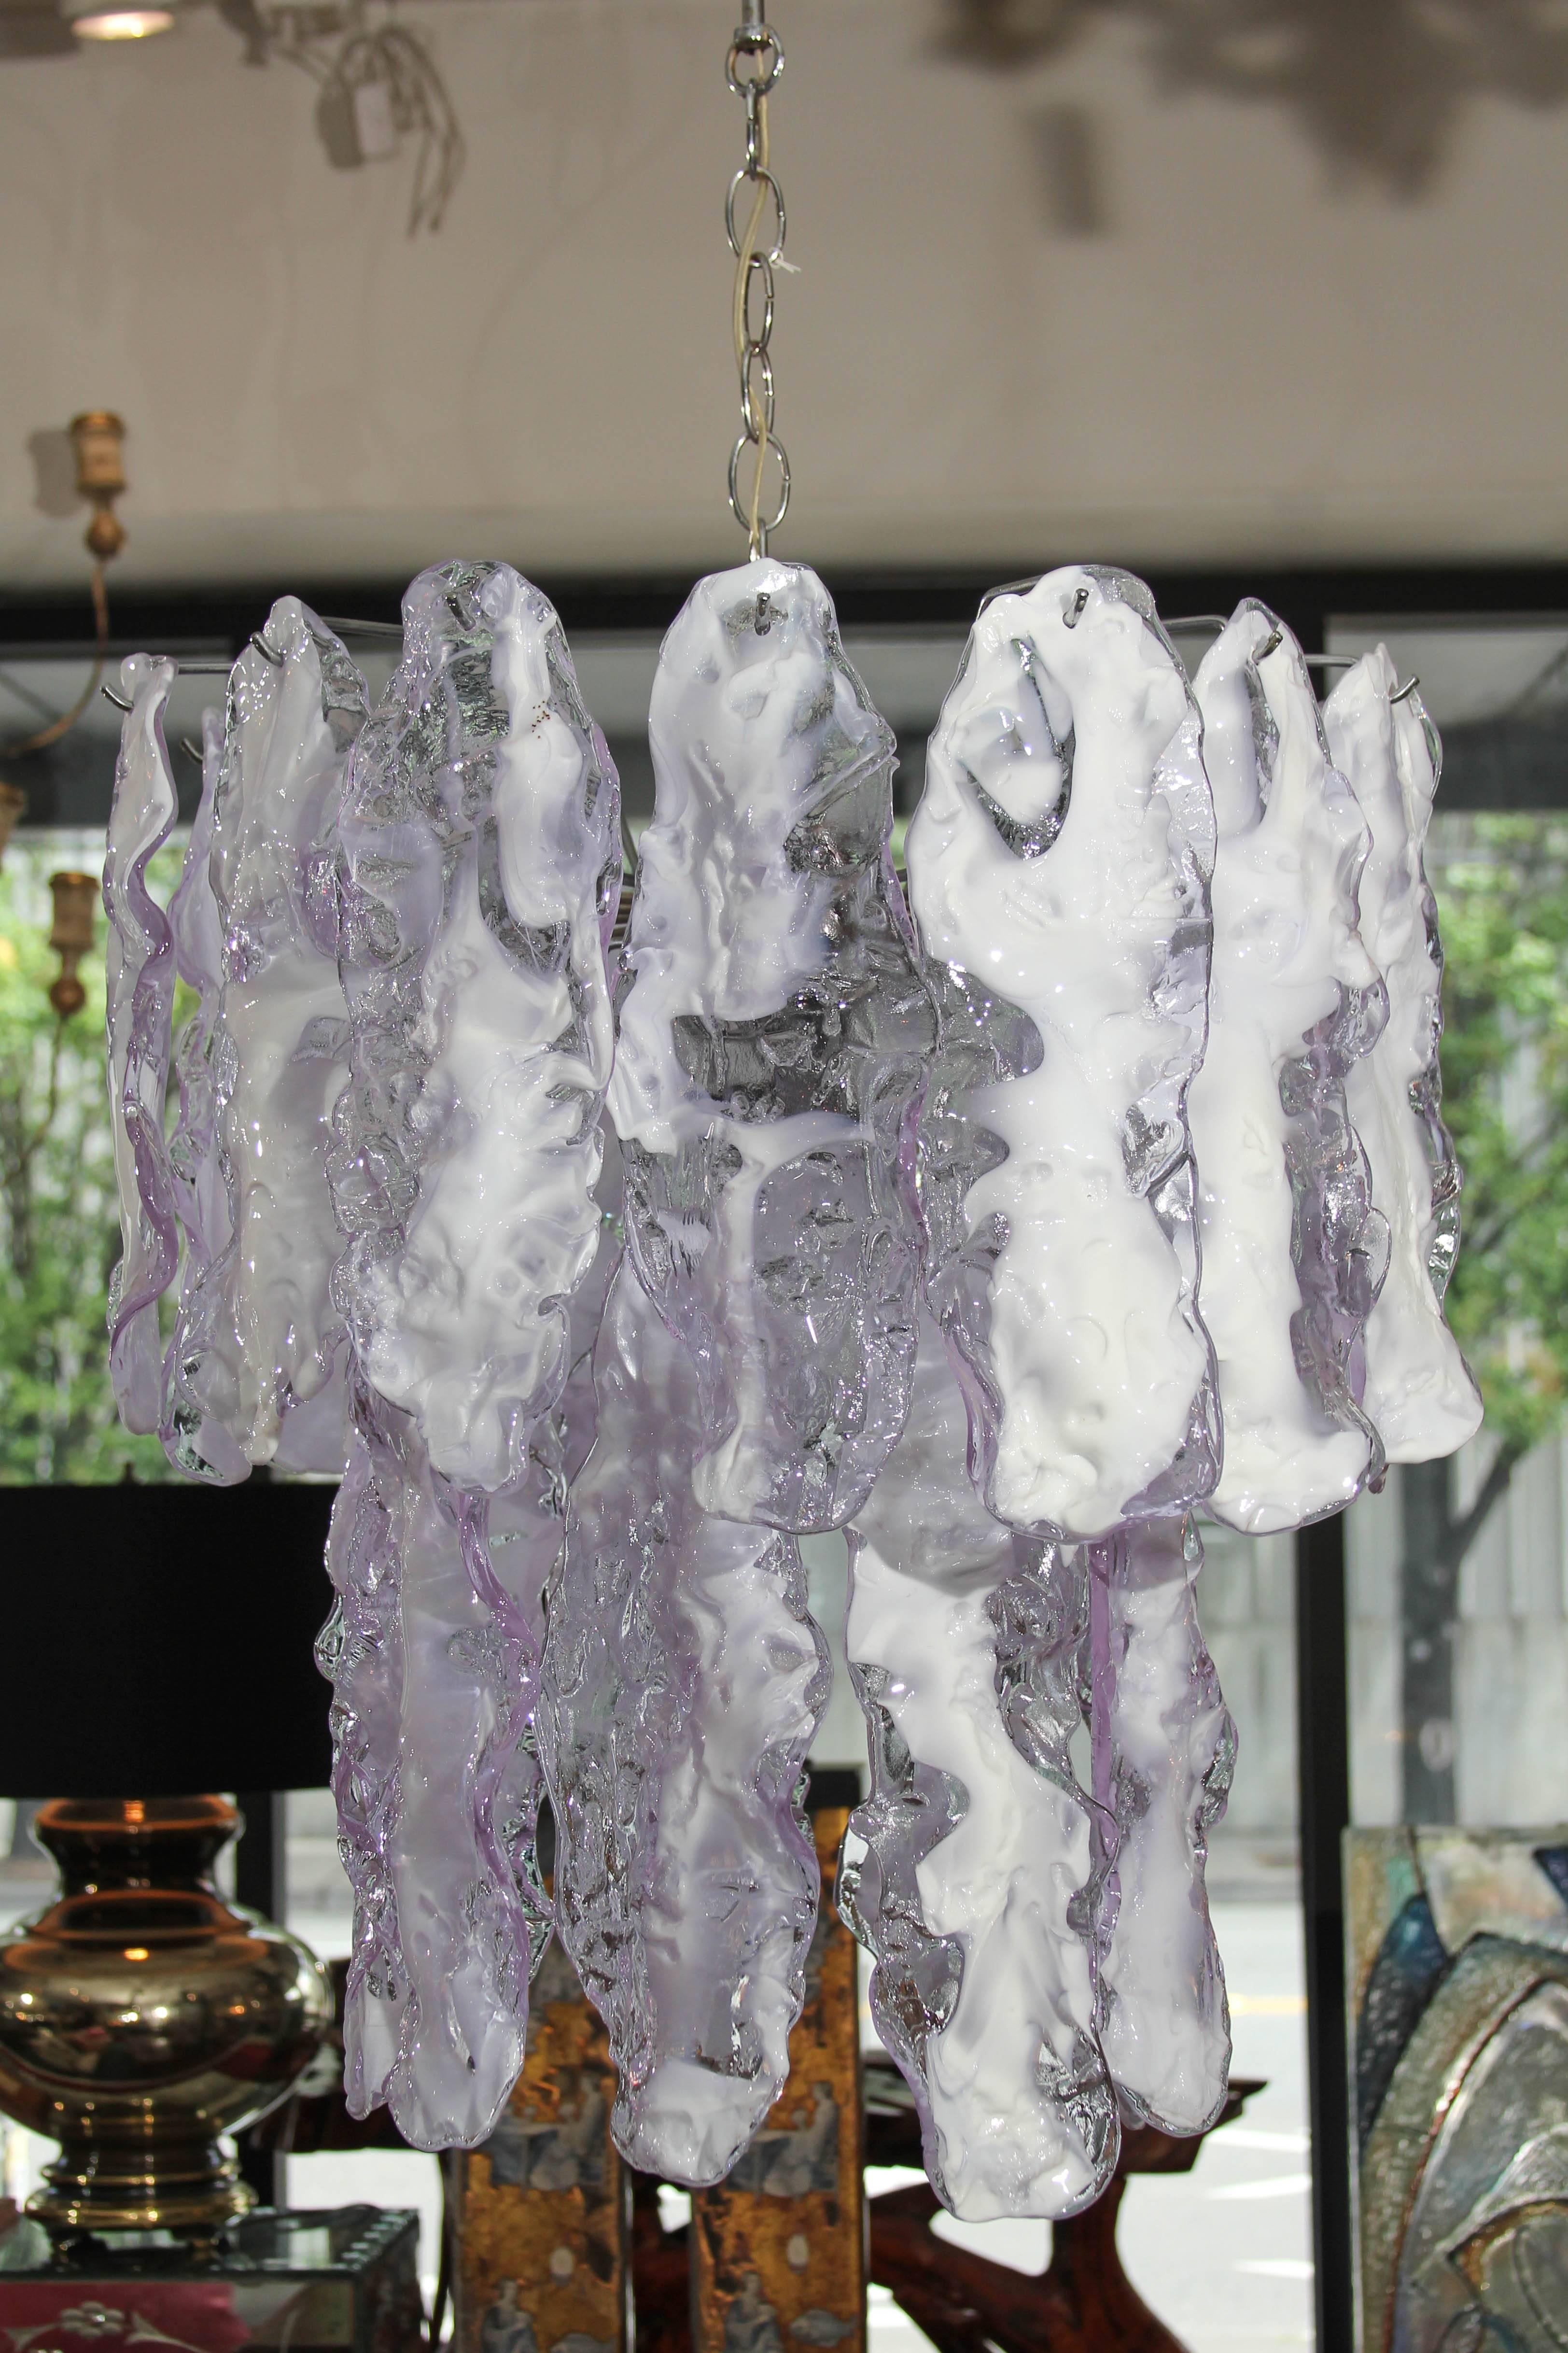 Large irregular lavender and white glass chandelier on chromed frame with six interior lights.